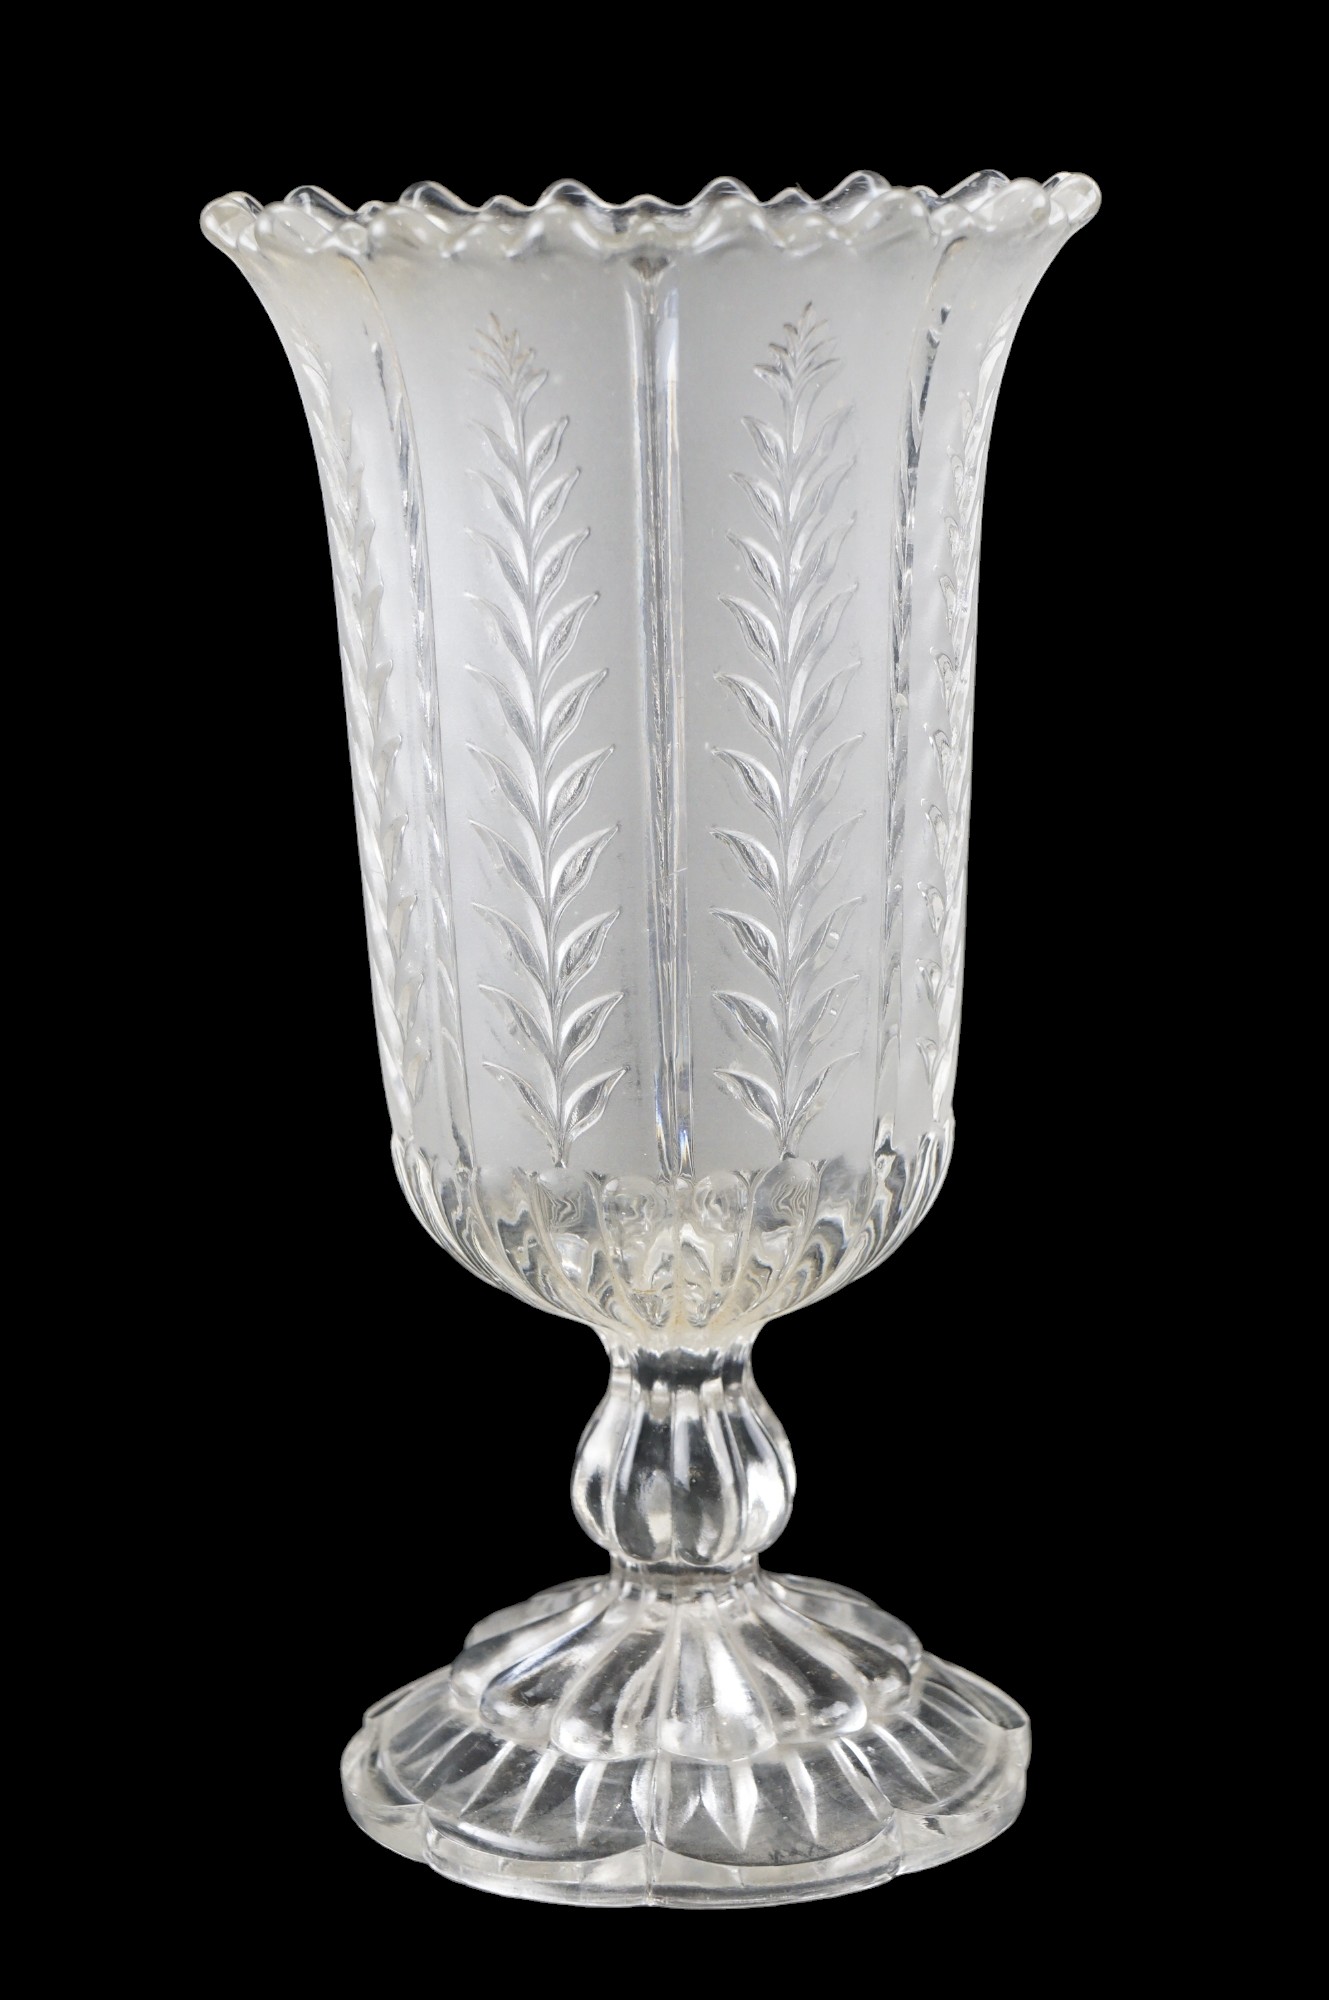 A Victorian pressed glass celery vase, 23 cm